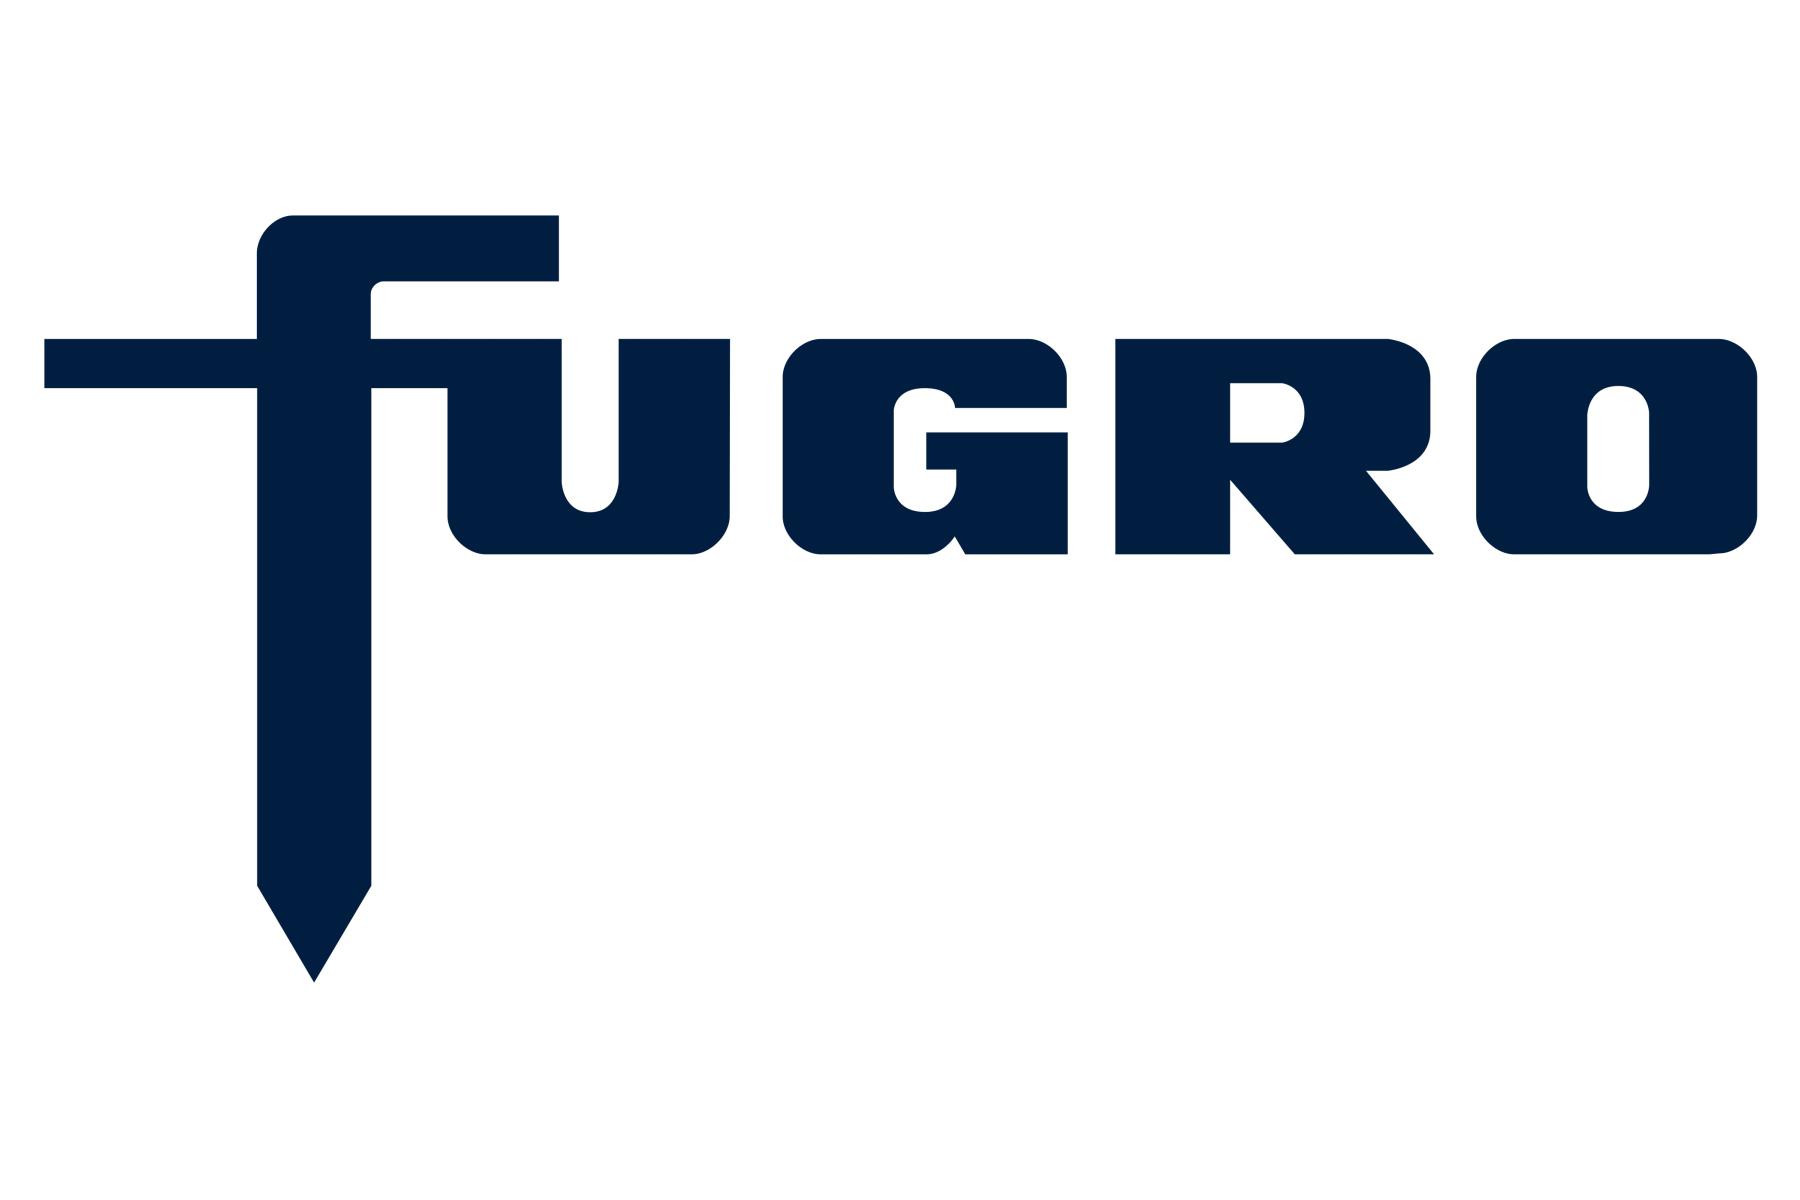 Fugro (© Fugro. All rights reserved)